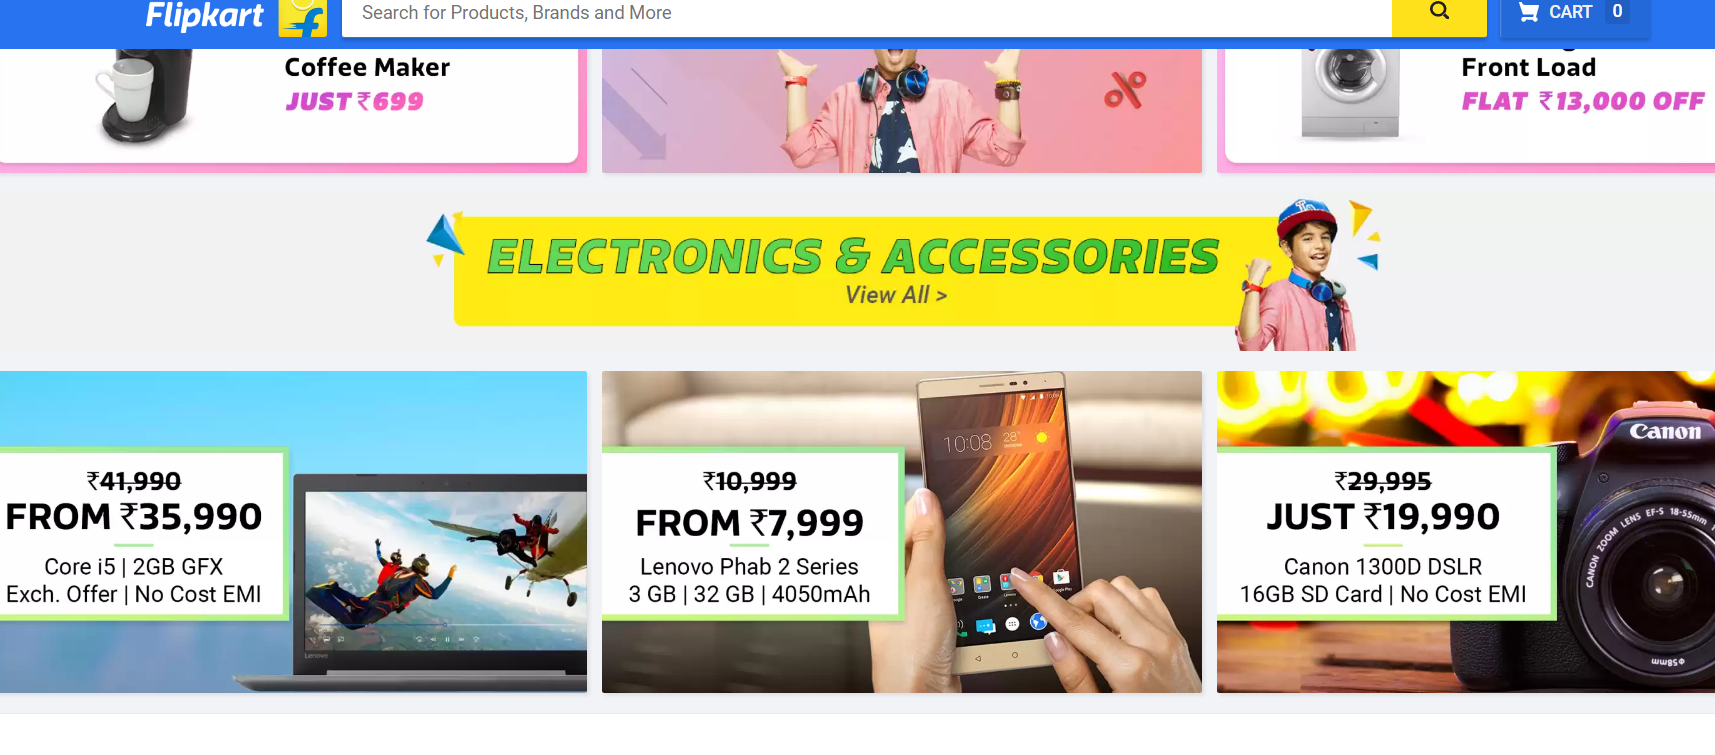 Top Picks from Flipkart Big Billion Days Sale; Big discounts for mobile phones, laptops and cameras 2